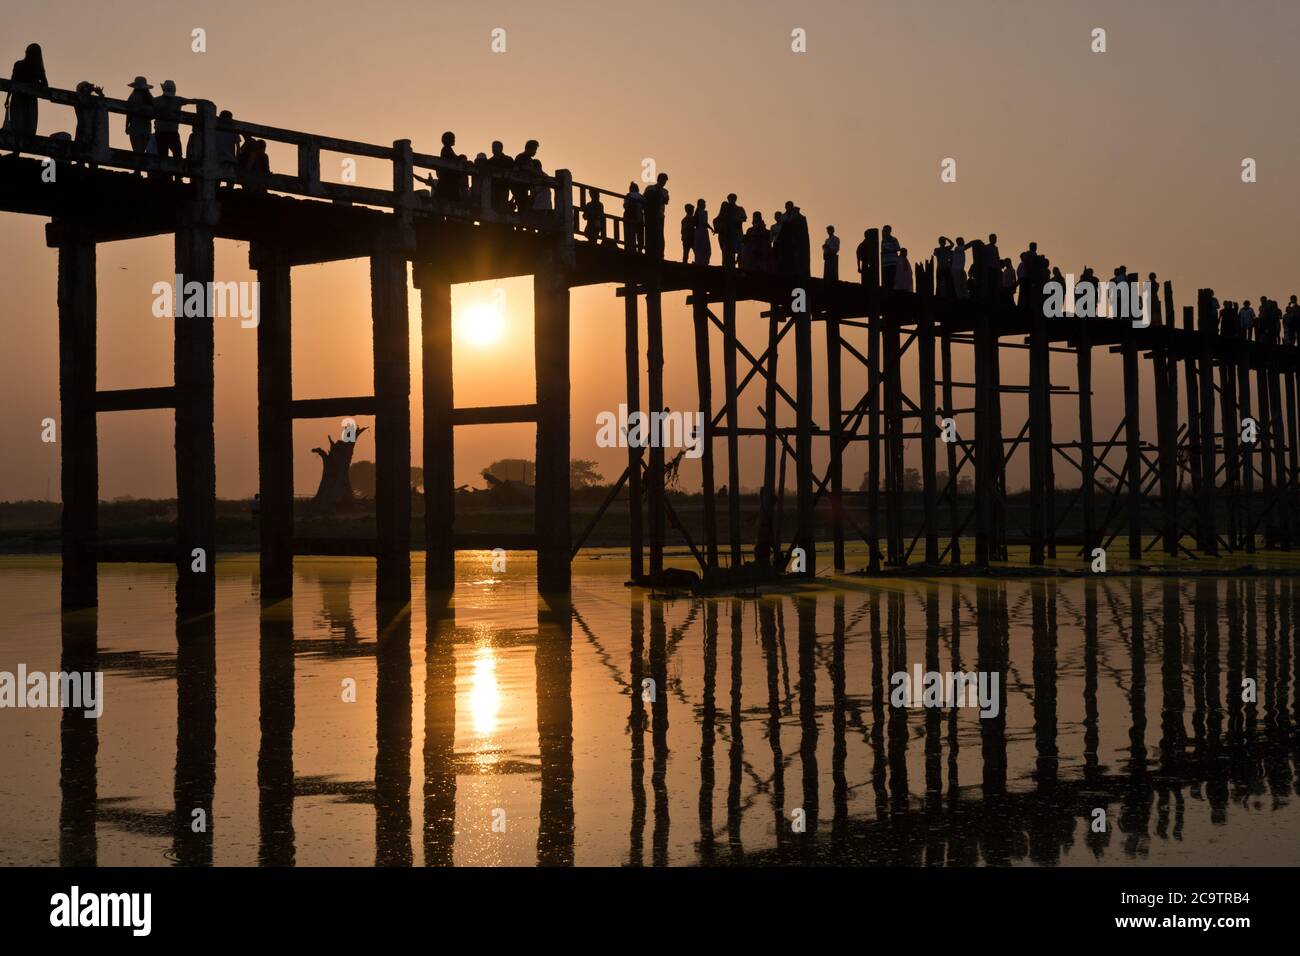 U Bein Bridge with people and sunset reflection, Amarapura, Mandalay, Myanmar, Asia Stock Photo